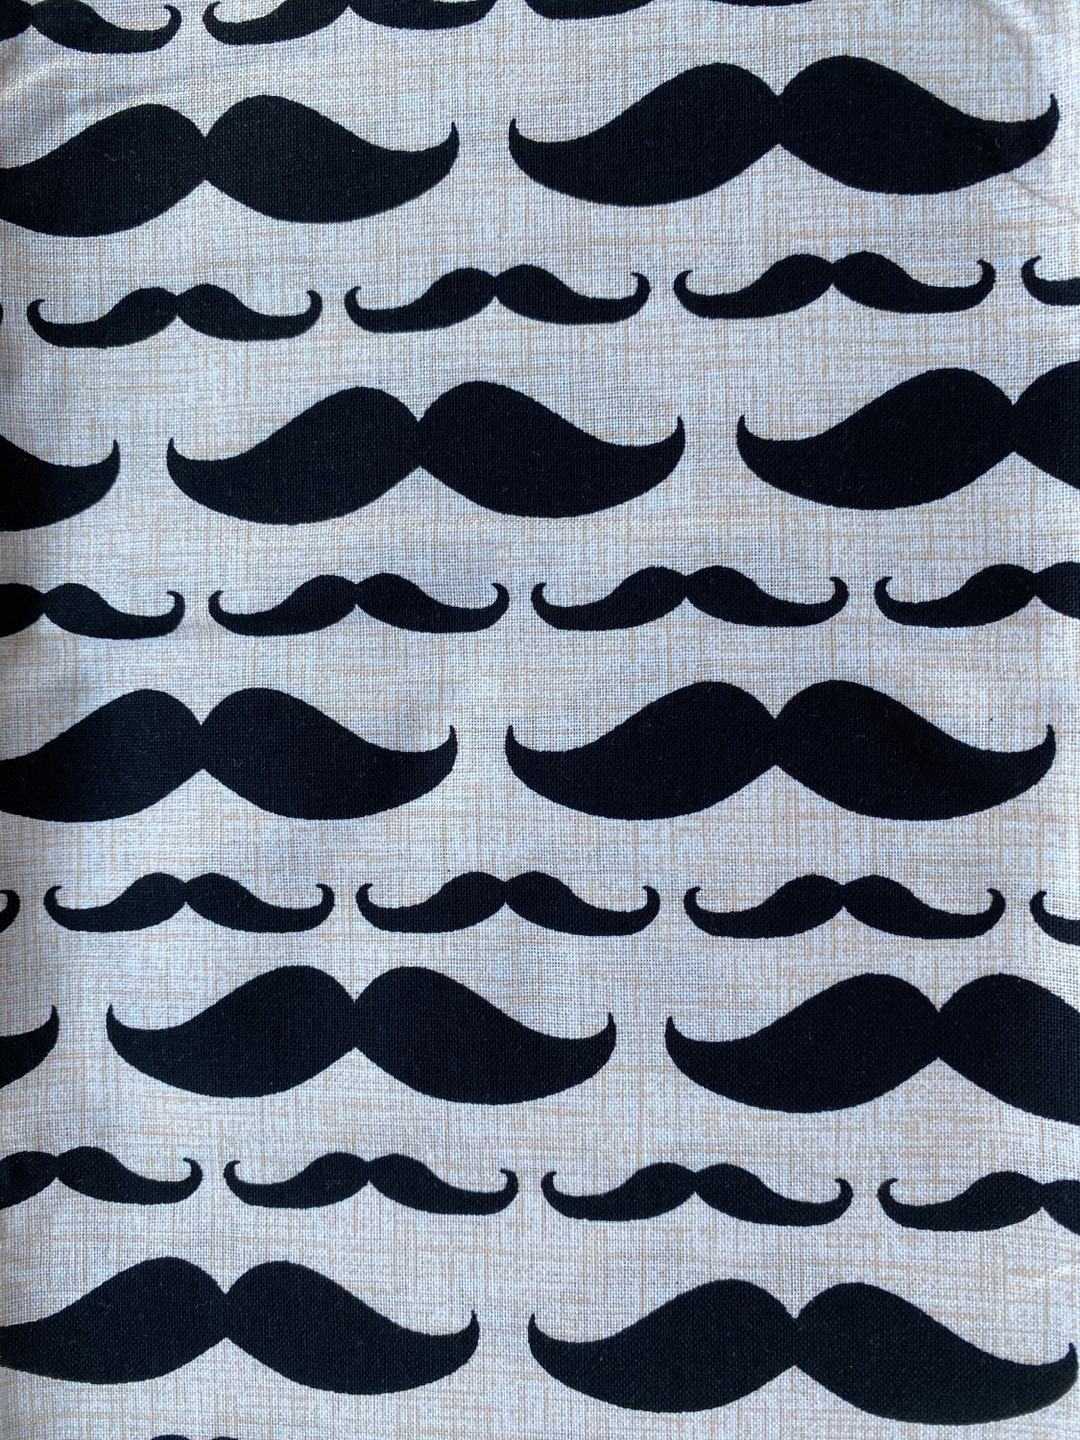 Mustache Cotton Fabric 18 X 21 Fat Quarter - Etsy